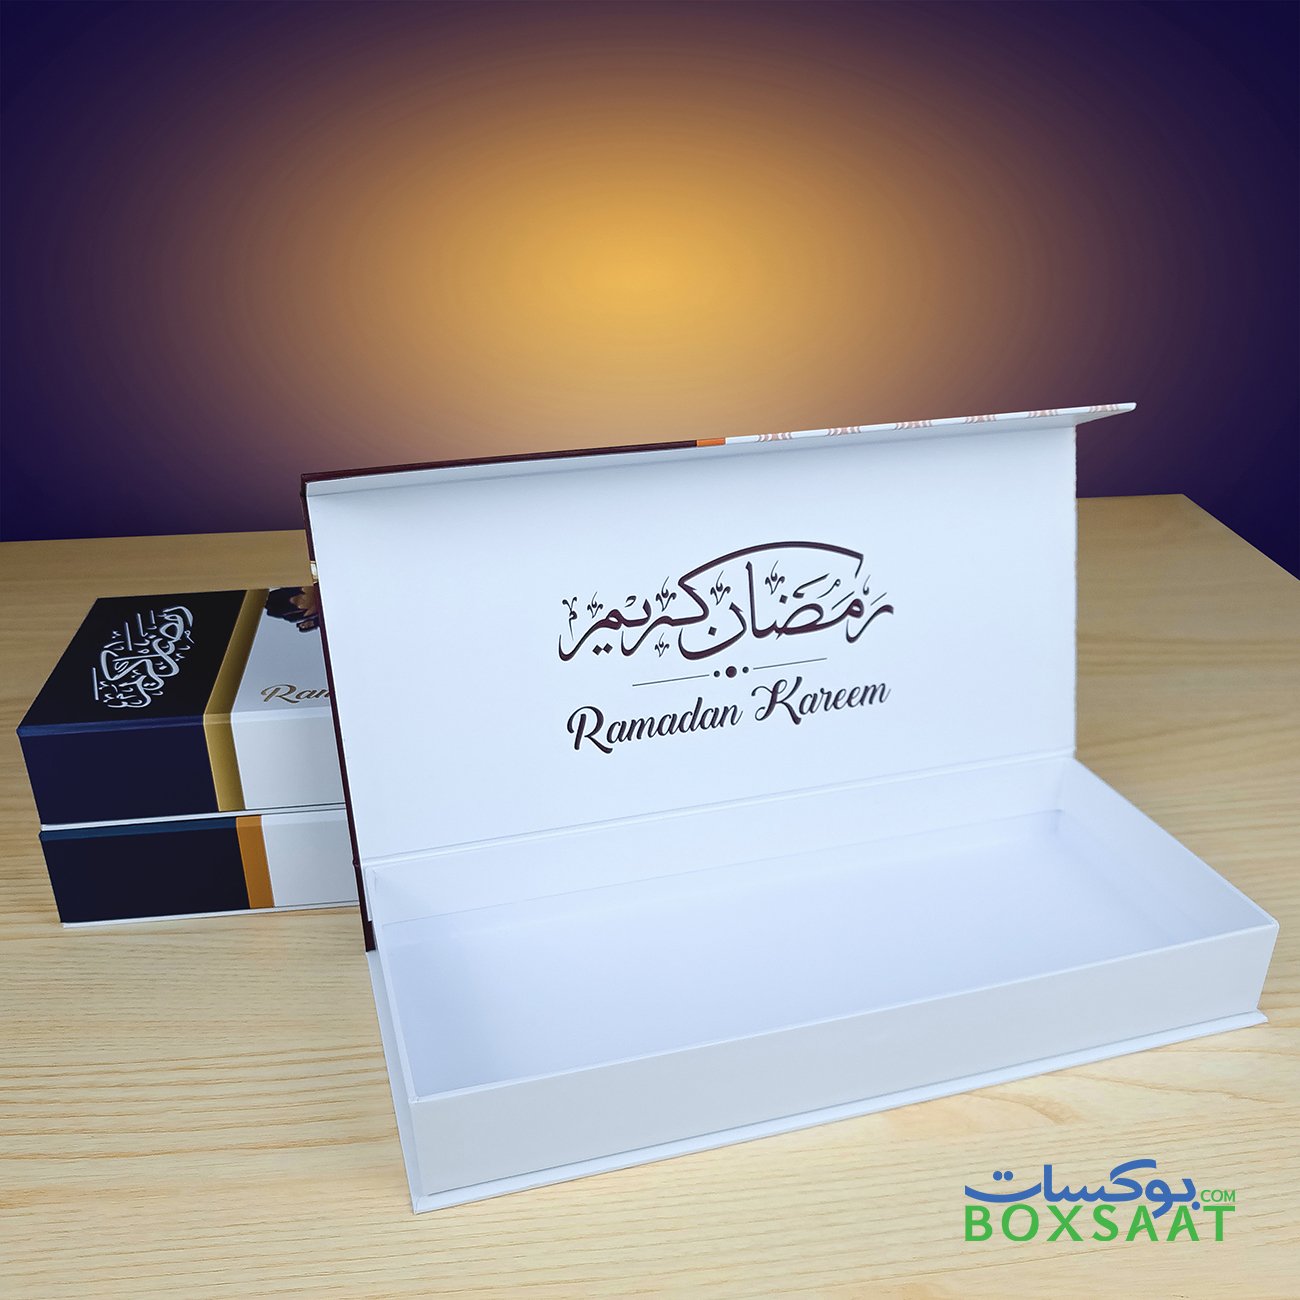 What do you put in a Ramadan gift box?